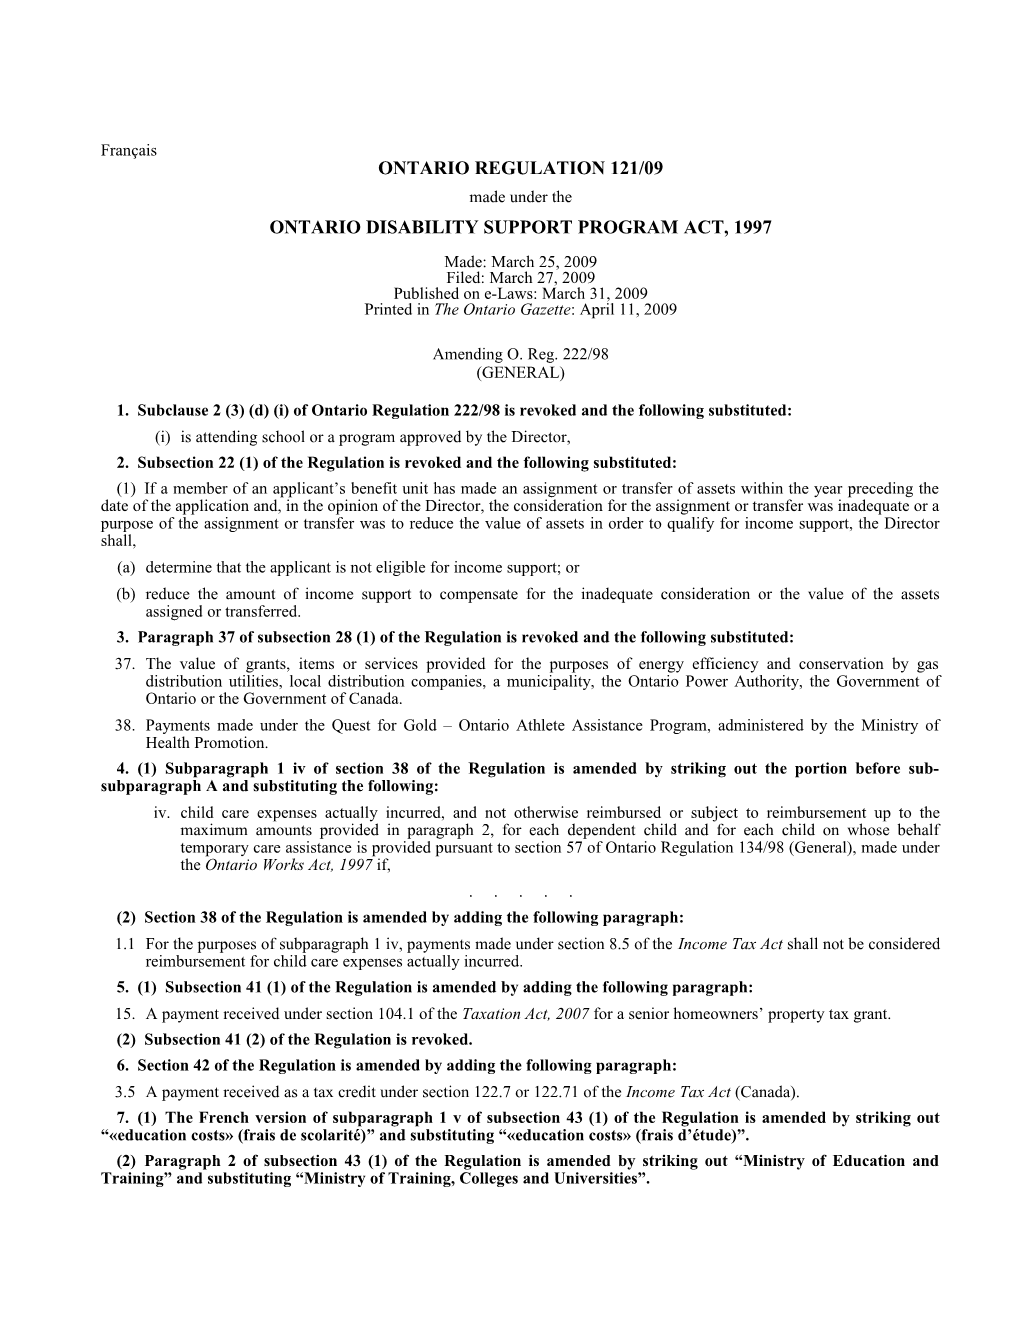 ONTARIO DISABILITY SUPPORT PROGRAM ACT, 1997 - O. Reg. 121/09